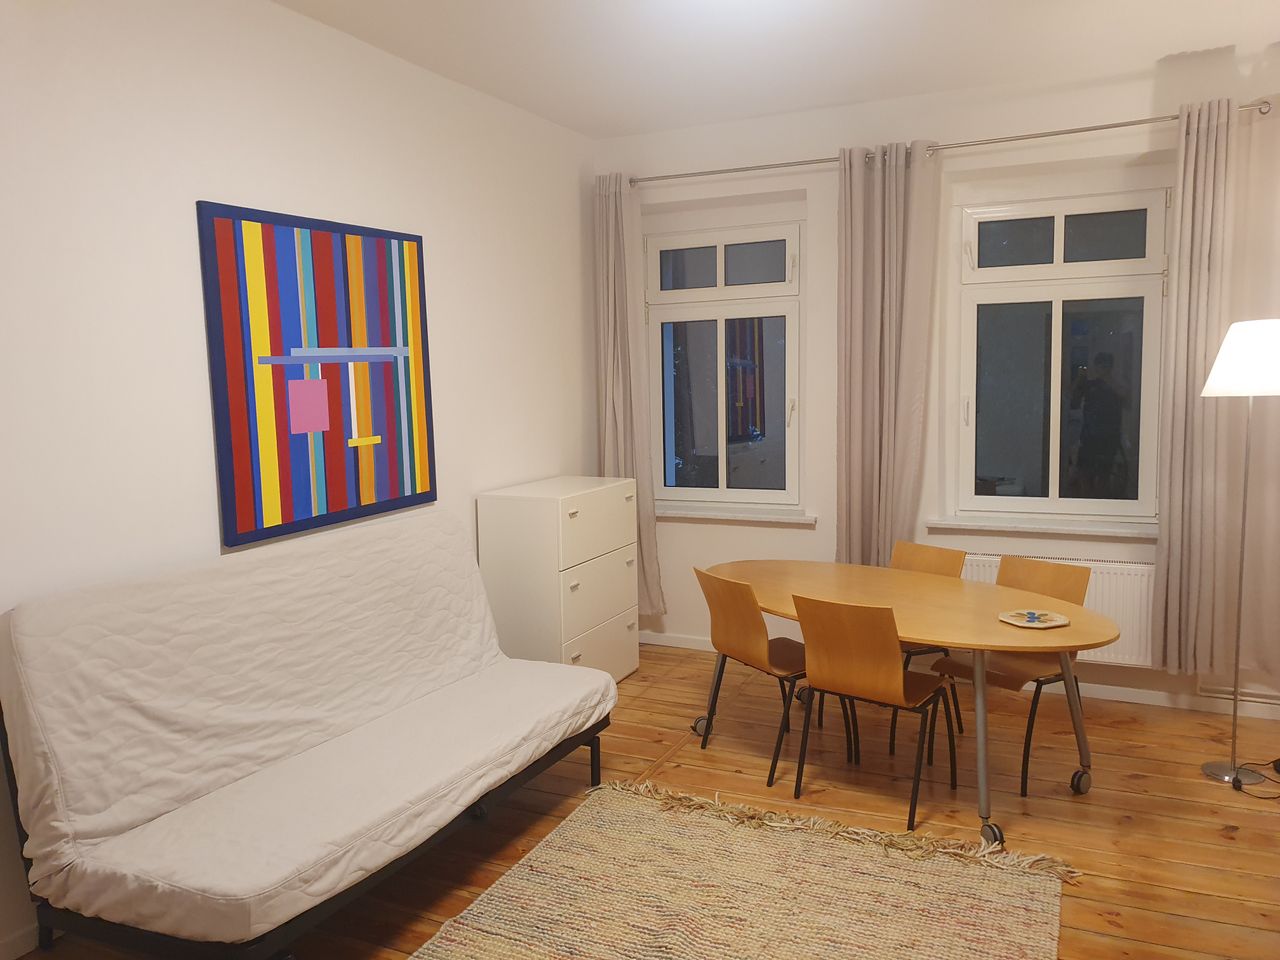 Extensively redecorated flat in quiet residential area of Berlin-Oberschöneweide